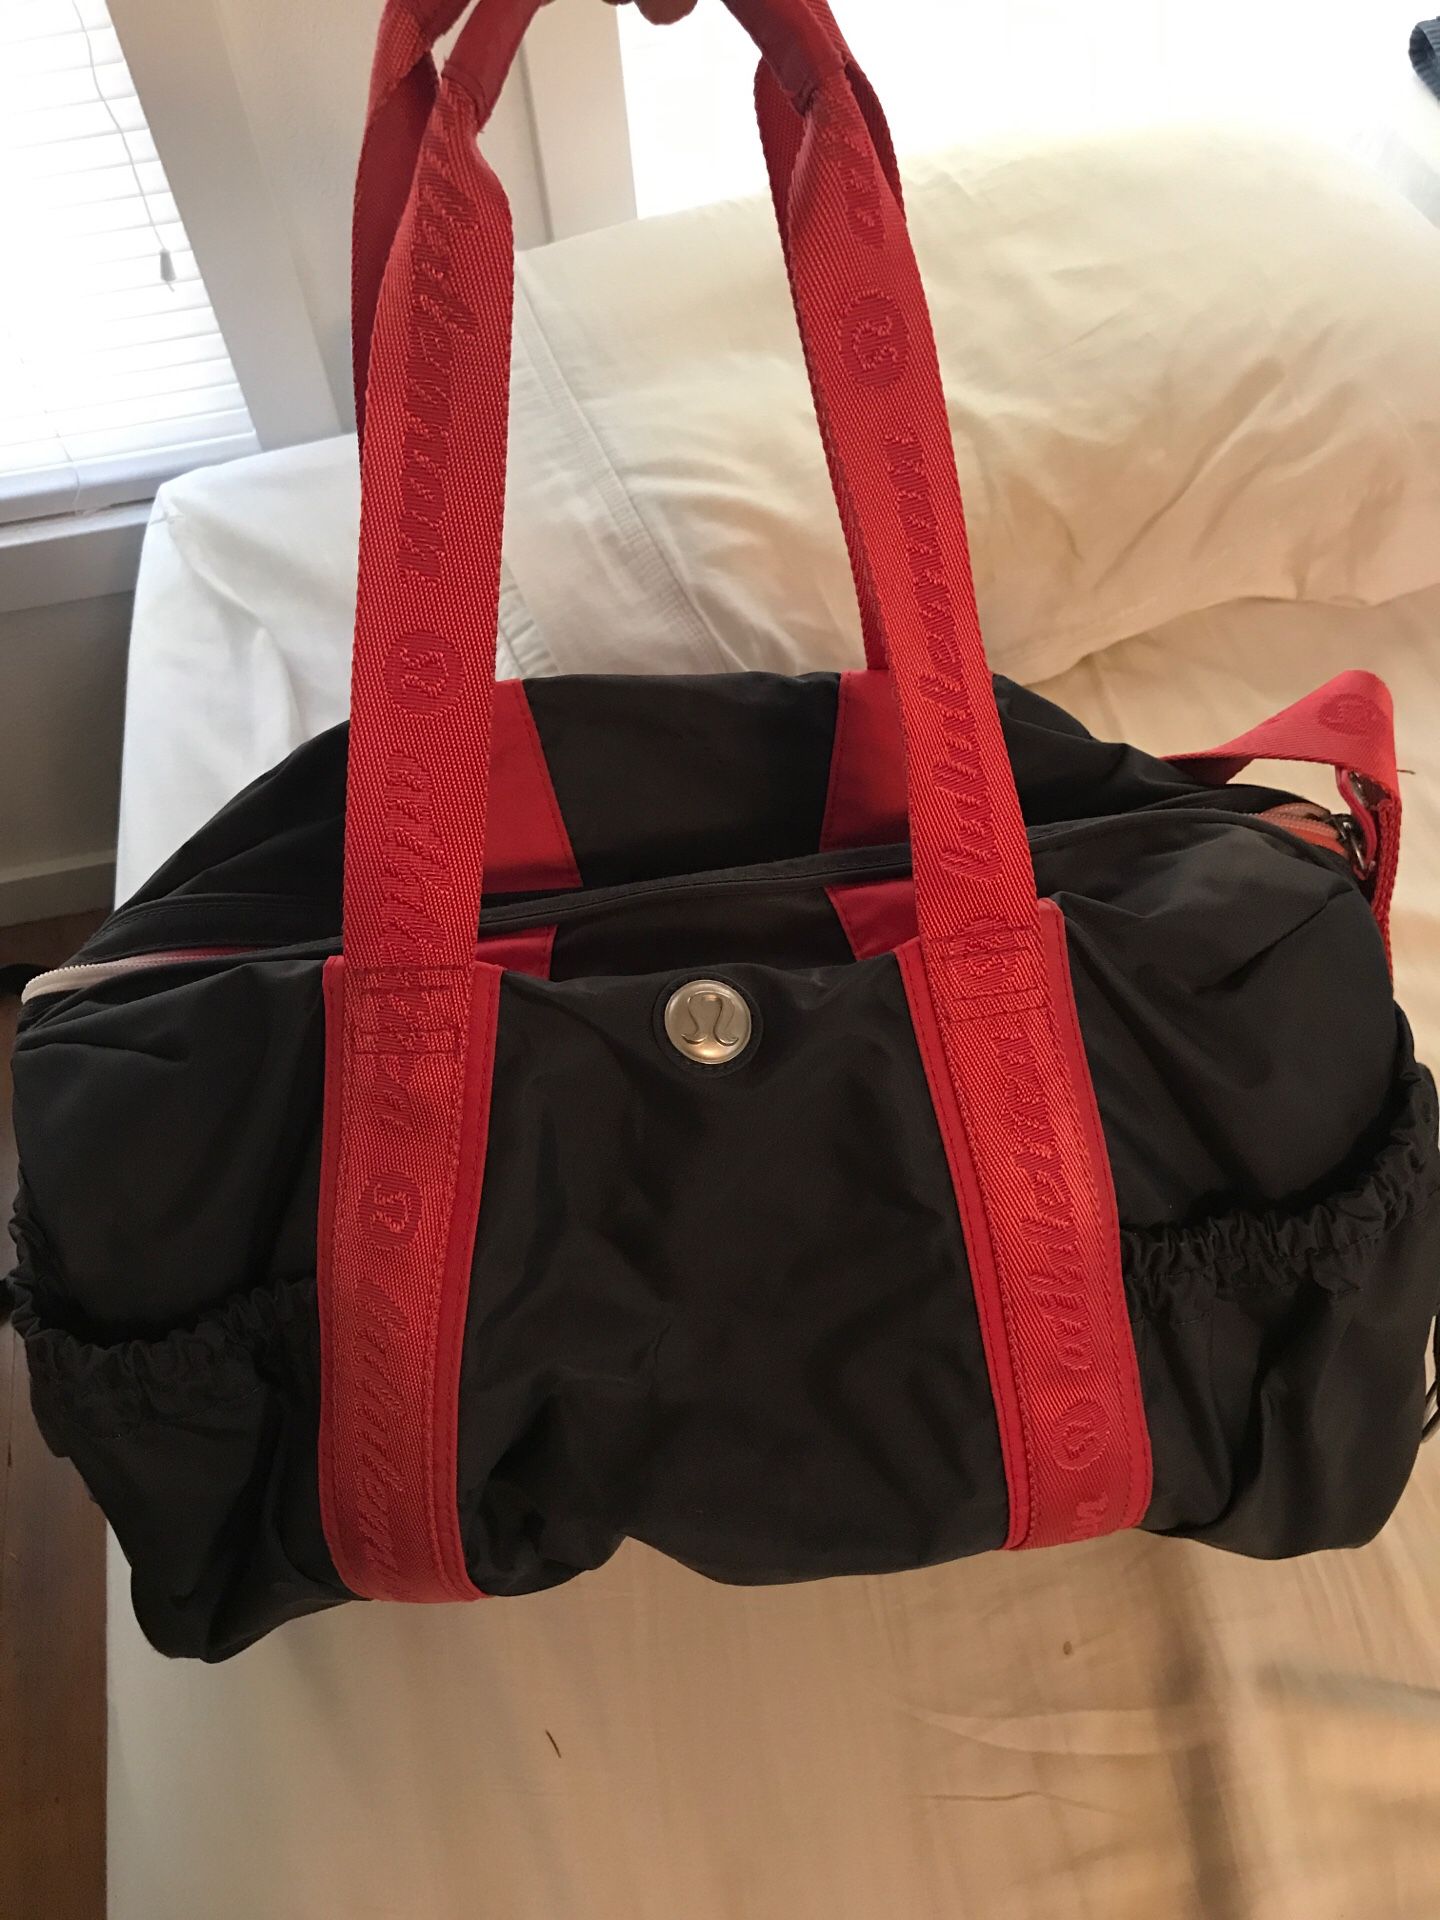 Lululemon Duffle Gym Travel Bag